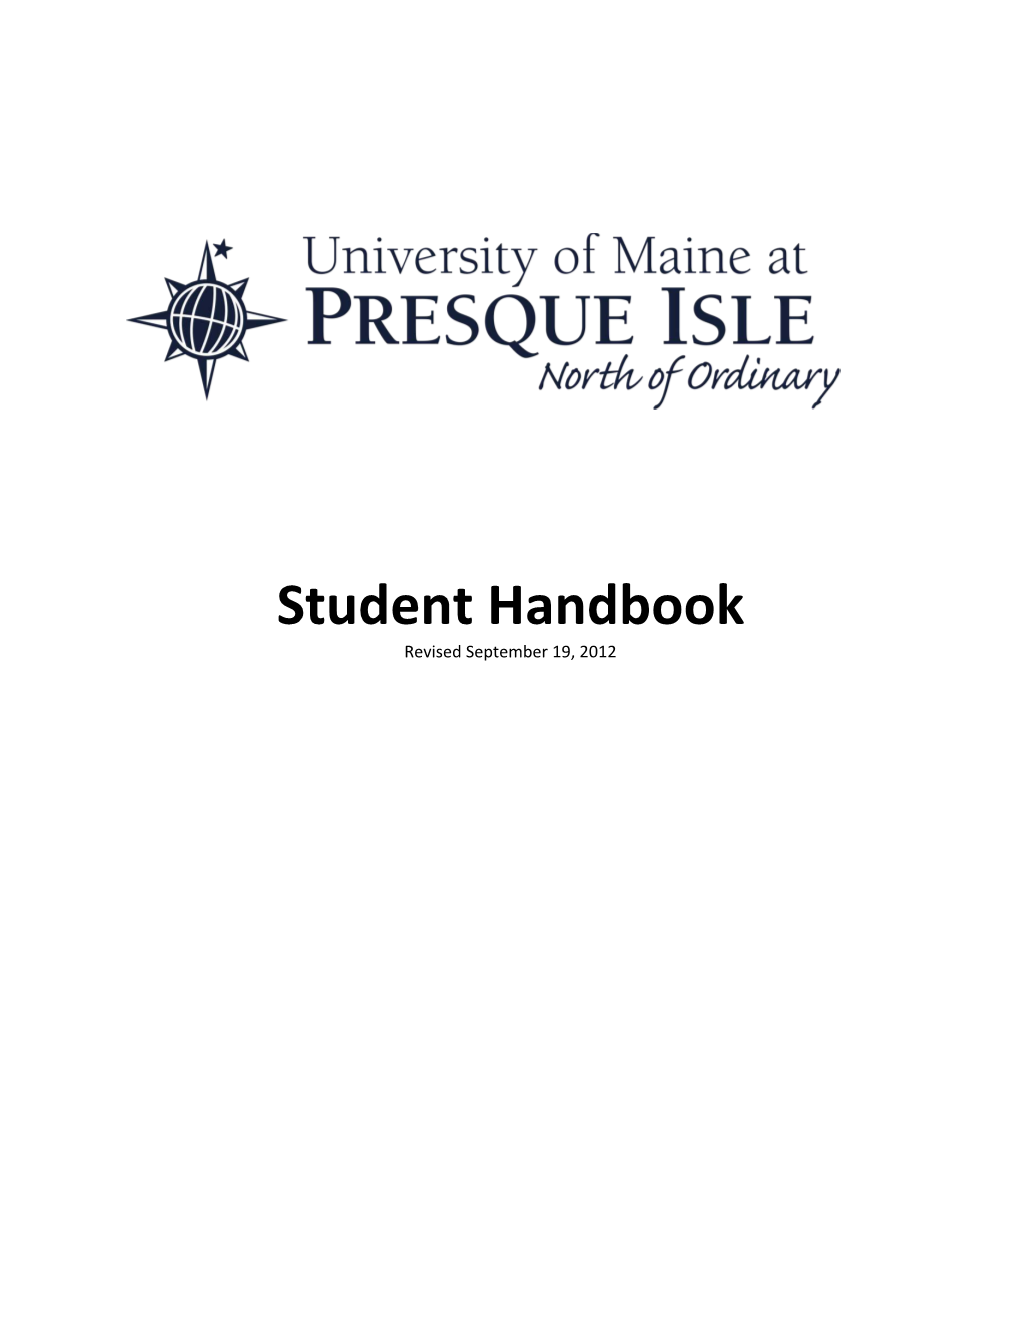 Student Handbook Revised September 19, 2012 ACADEMIC ACCOMMODATIONS